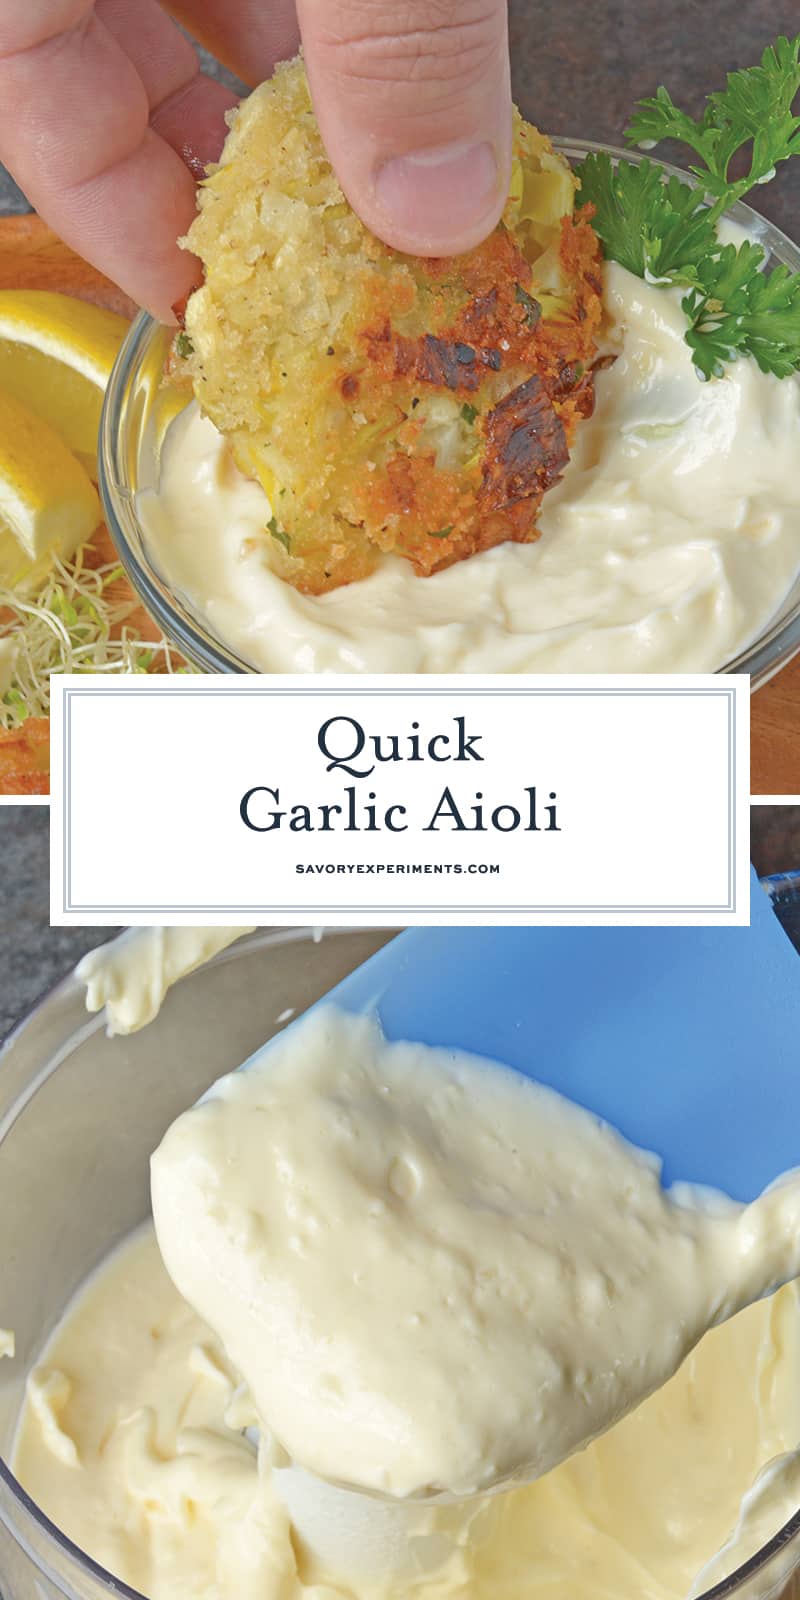 Quick Garlic Aioli + VIDEO - The Perfect Homemade Aioli Sauce!